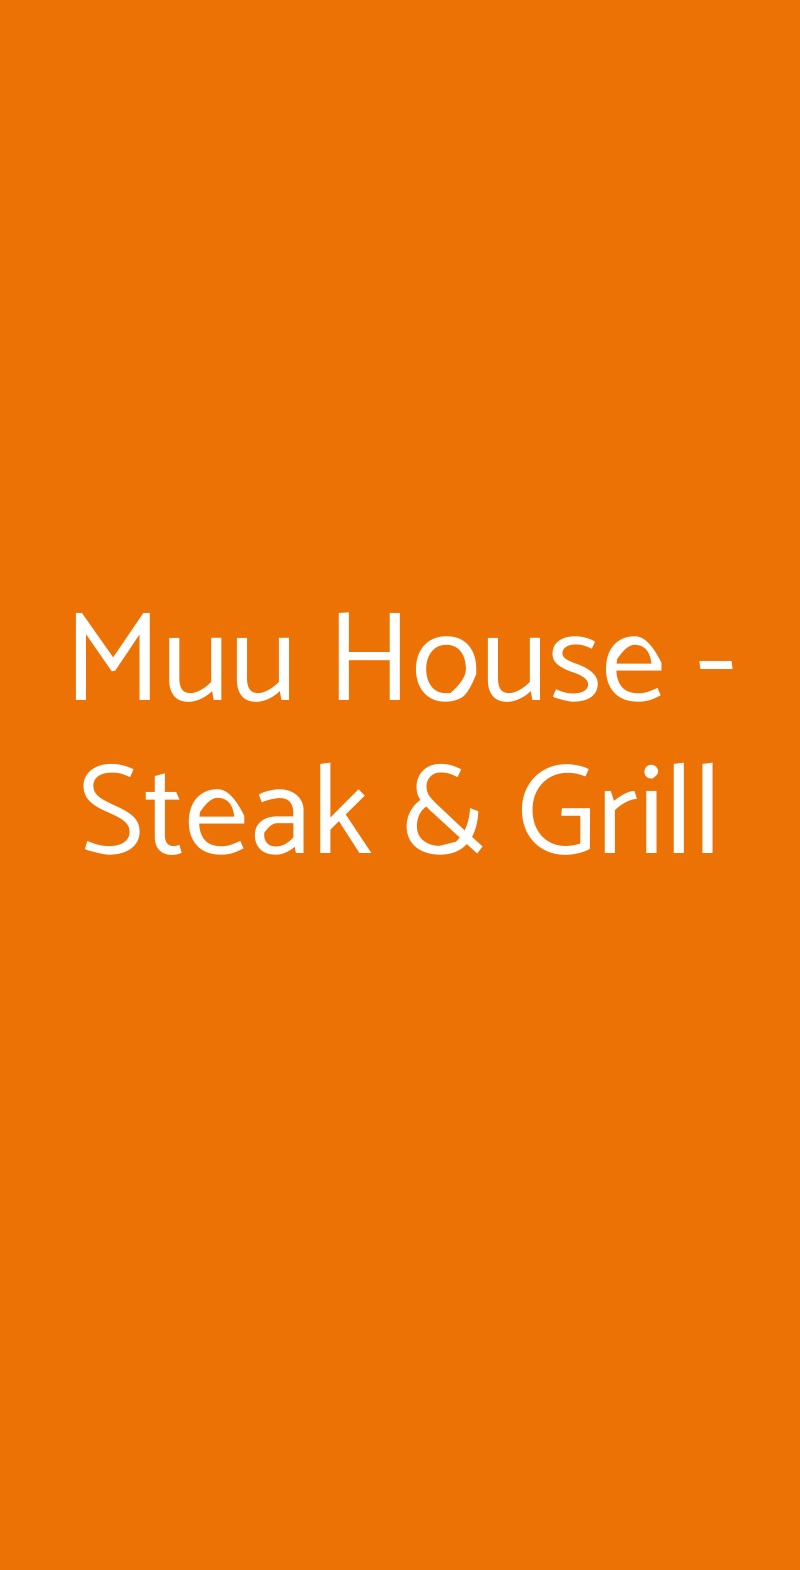 Muu House - Steak & Grill Milano menù 1 pagina